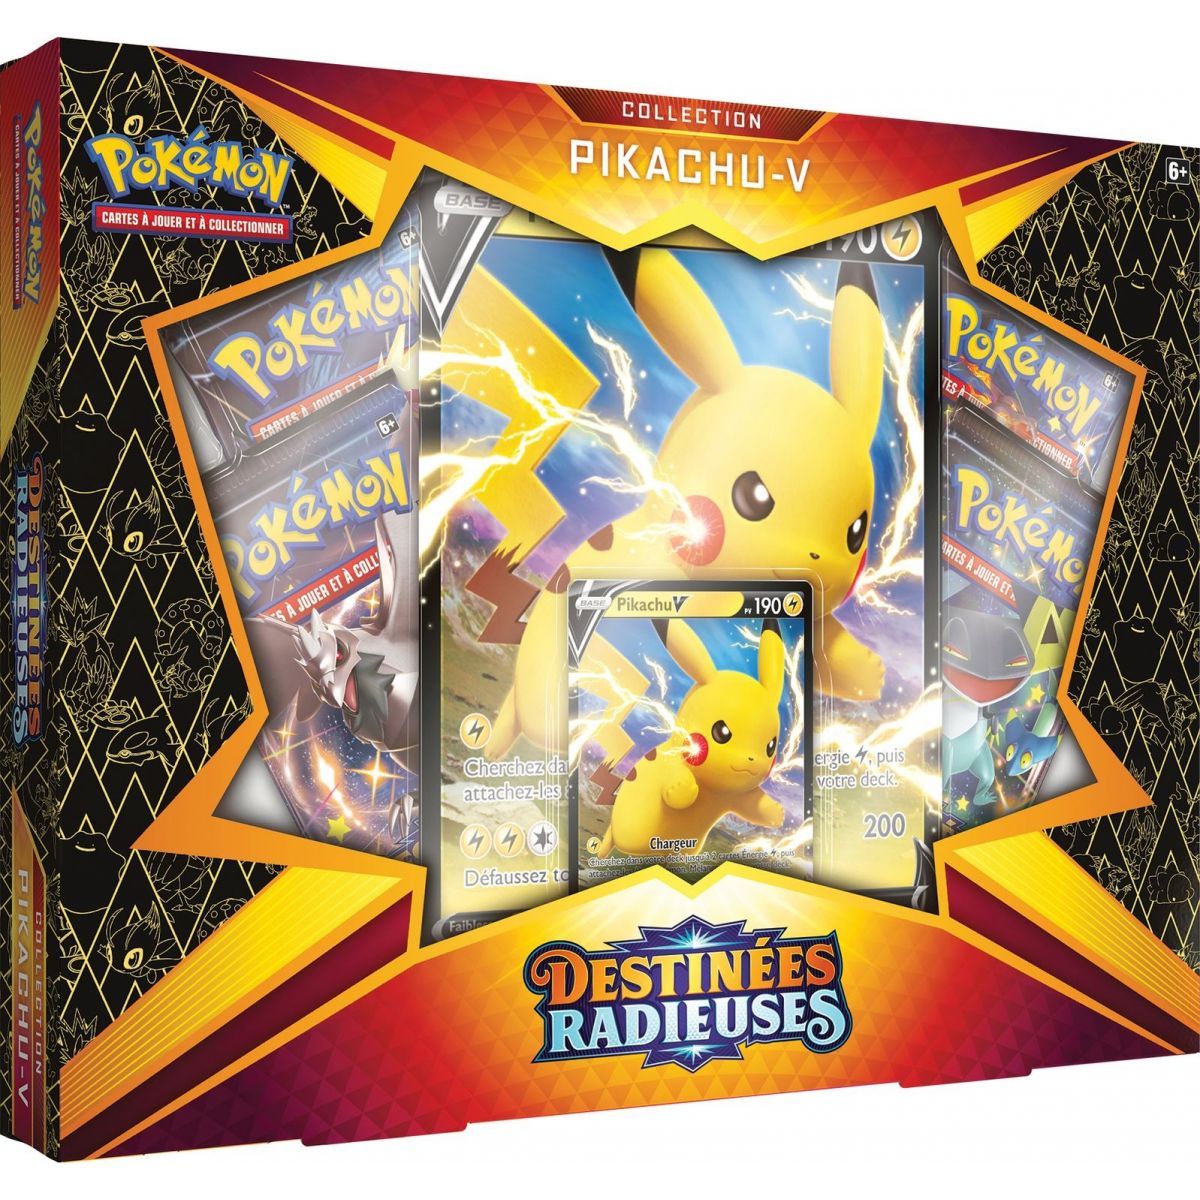 Pokémon - Box set - Pikachu V - Shining Fates [EB4.5] - FR